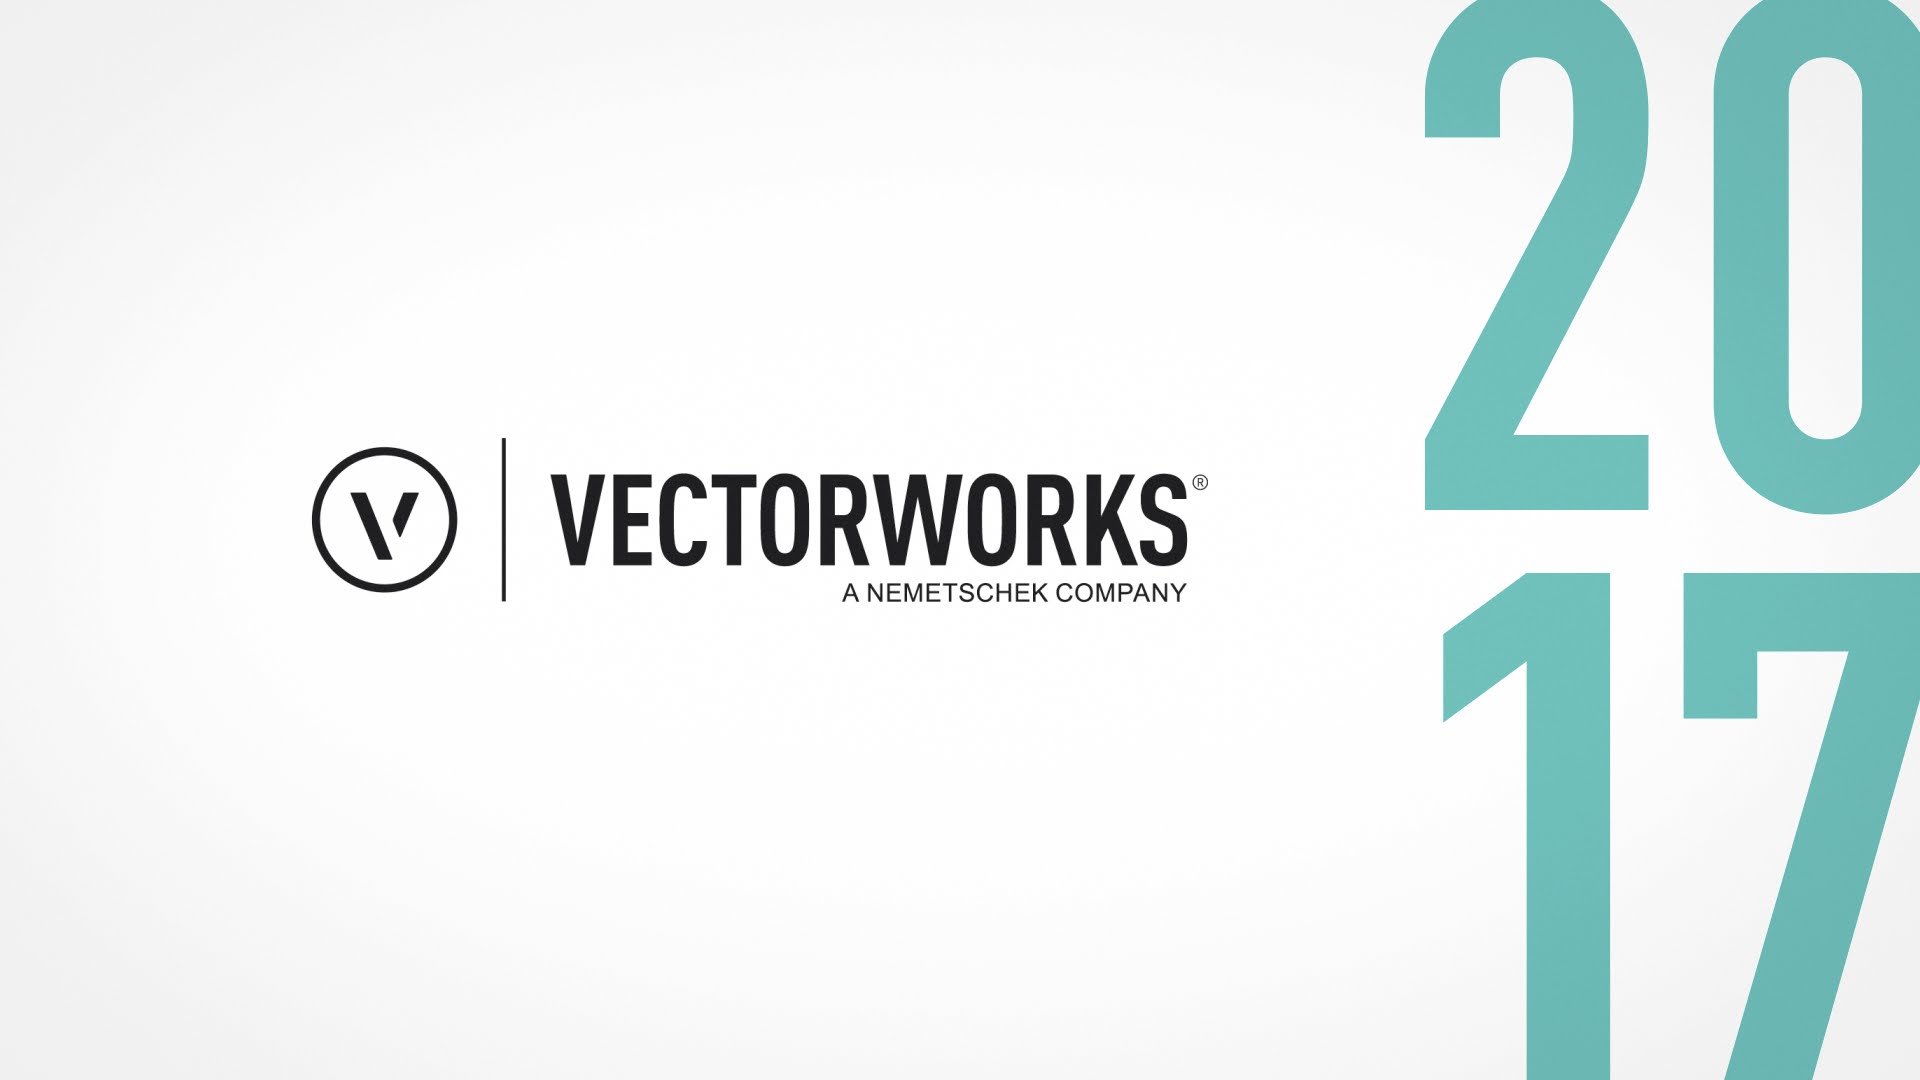 vectorworks mac crack